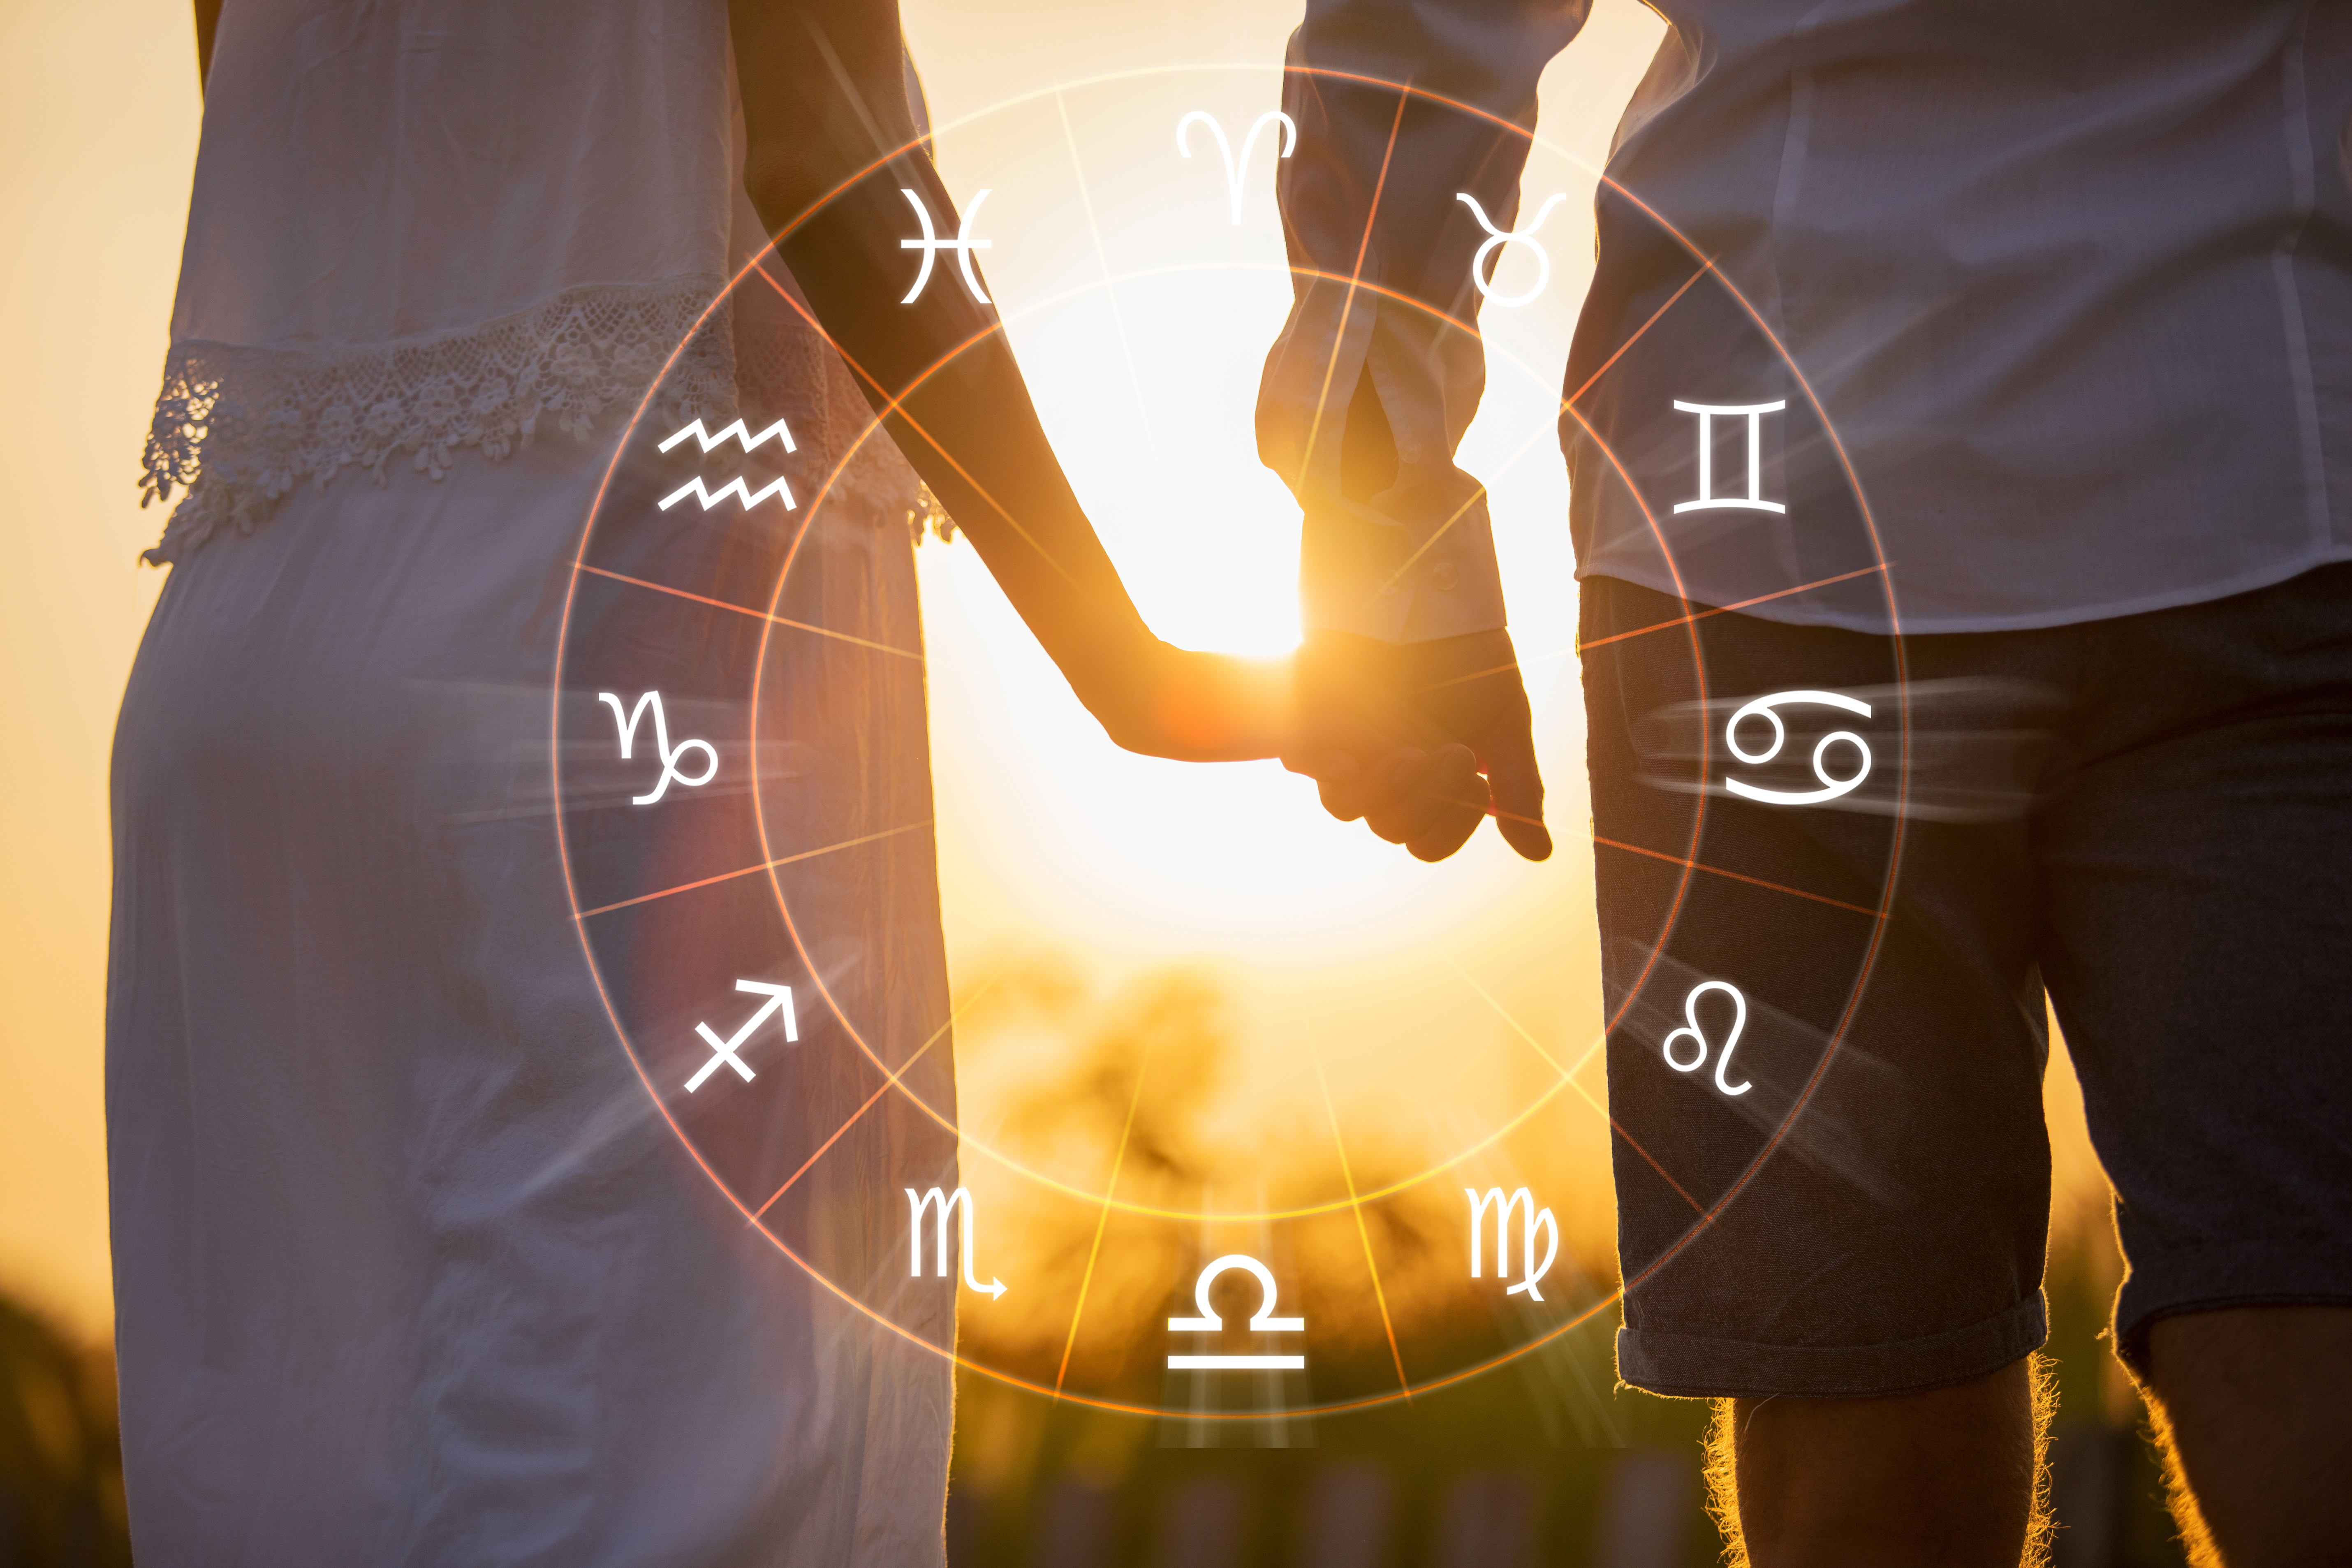 A couple holding hands inside the Zodiac wheel | Source: Shutterstock